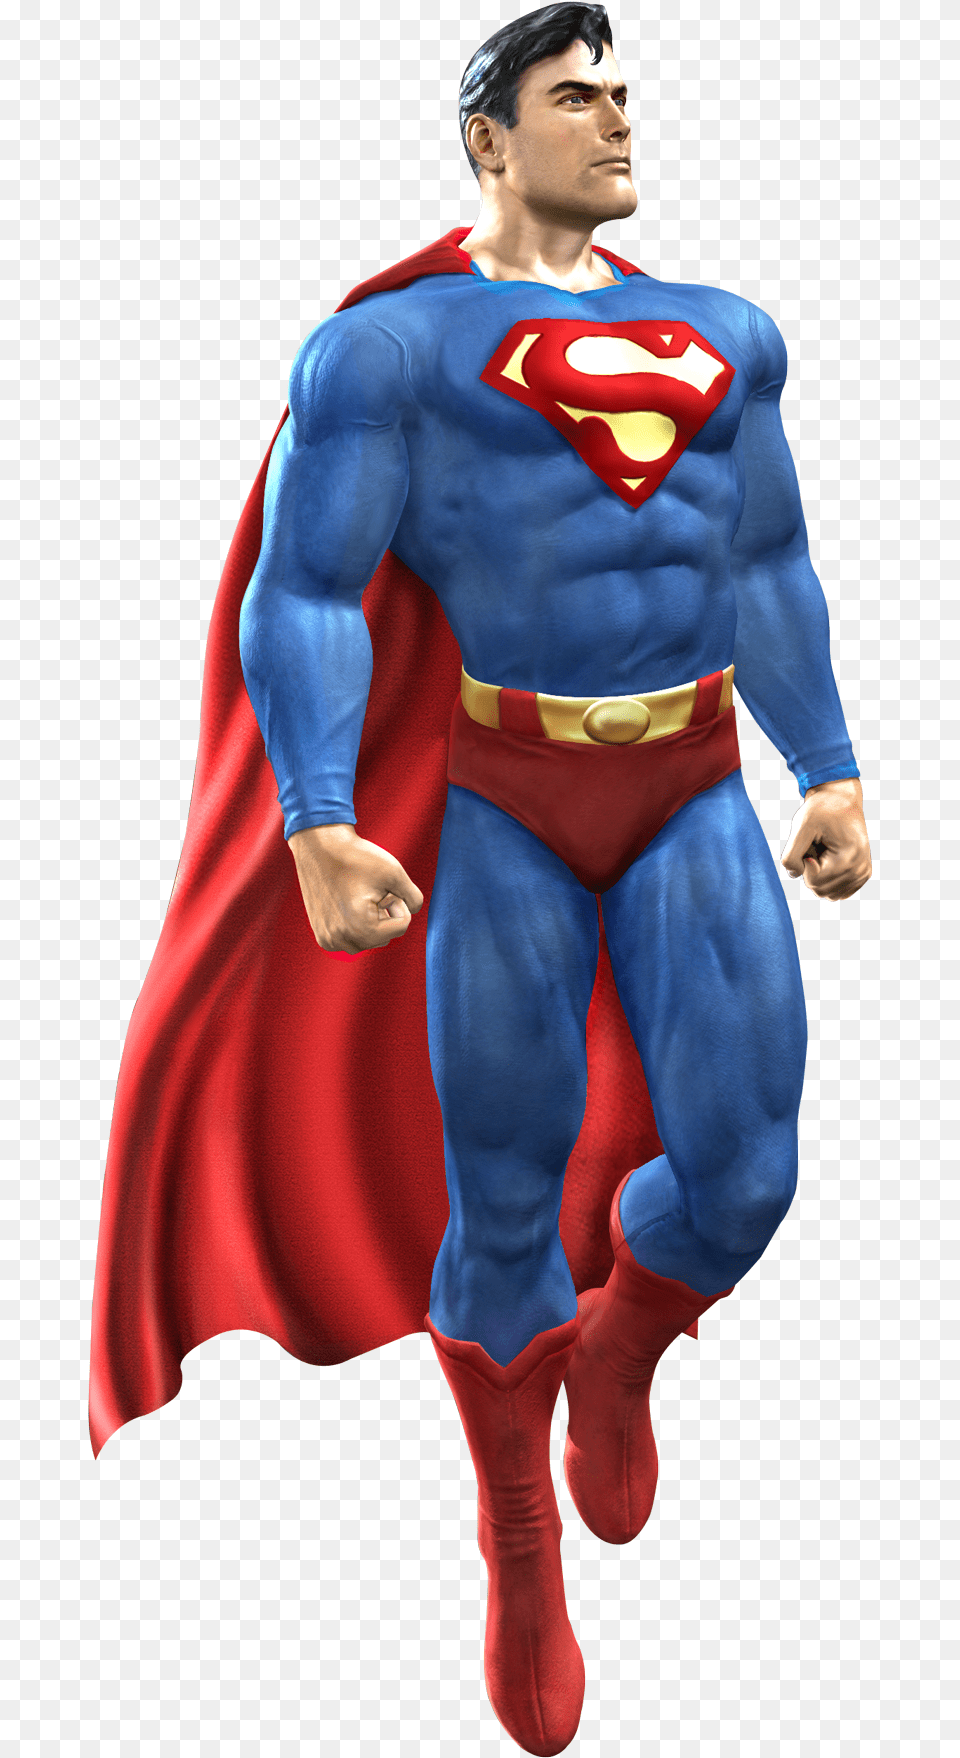 Cartoon Superman Pic Transparent Superman, Cape, Clothing, Adult, Person Png Image